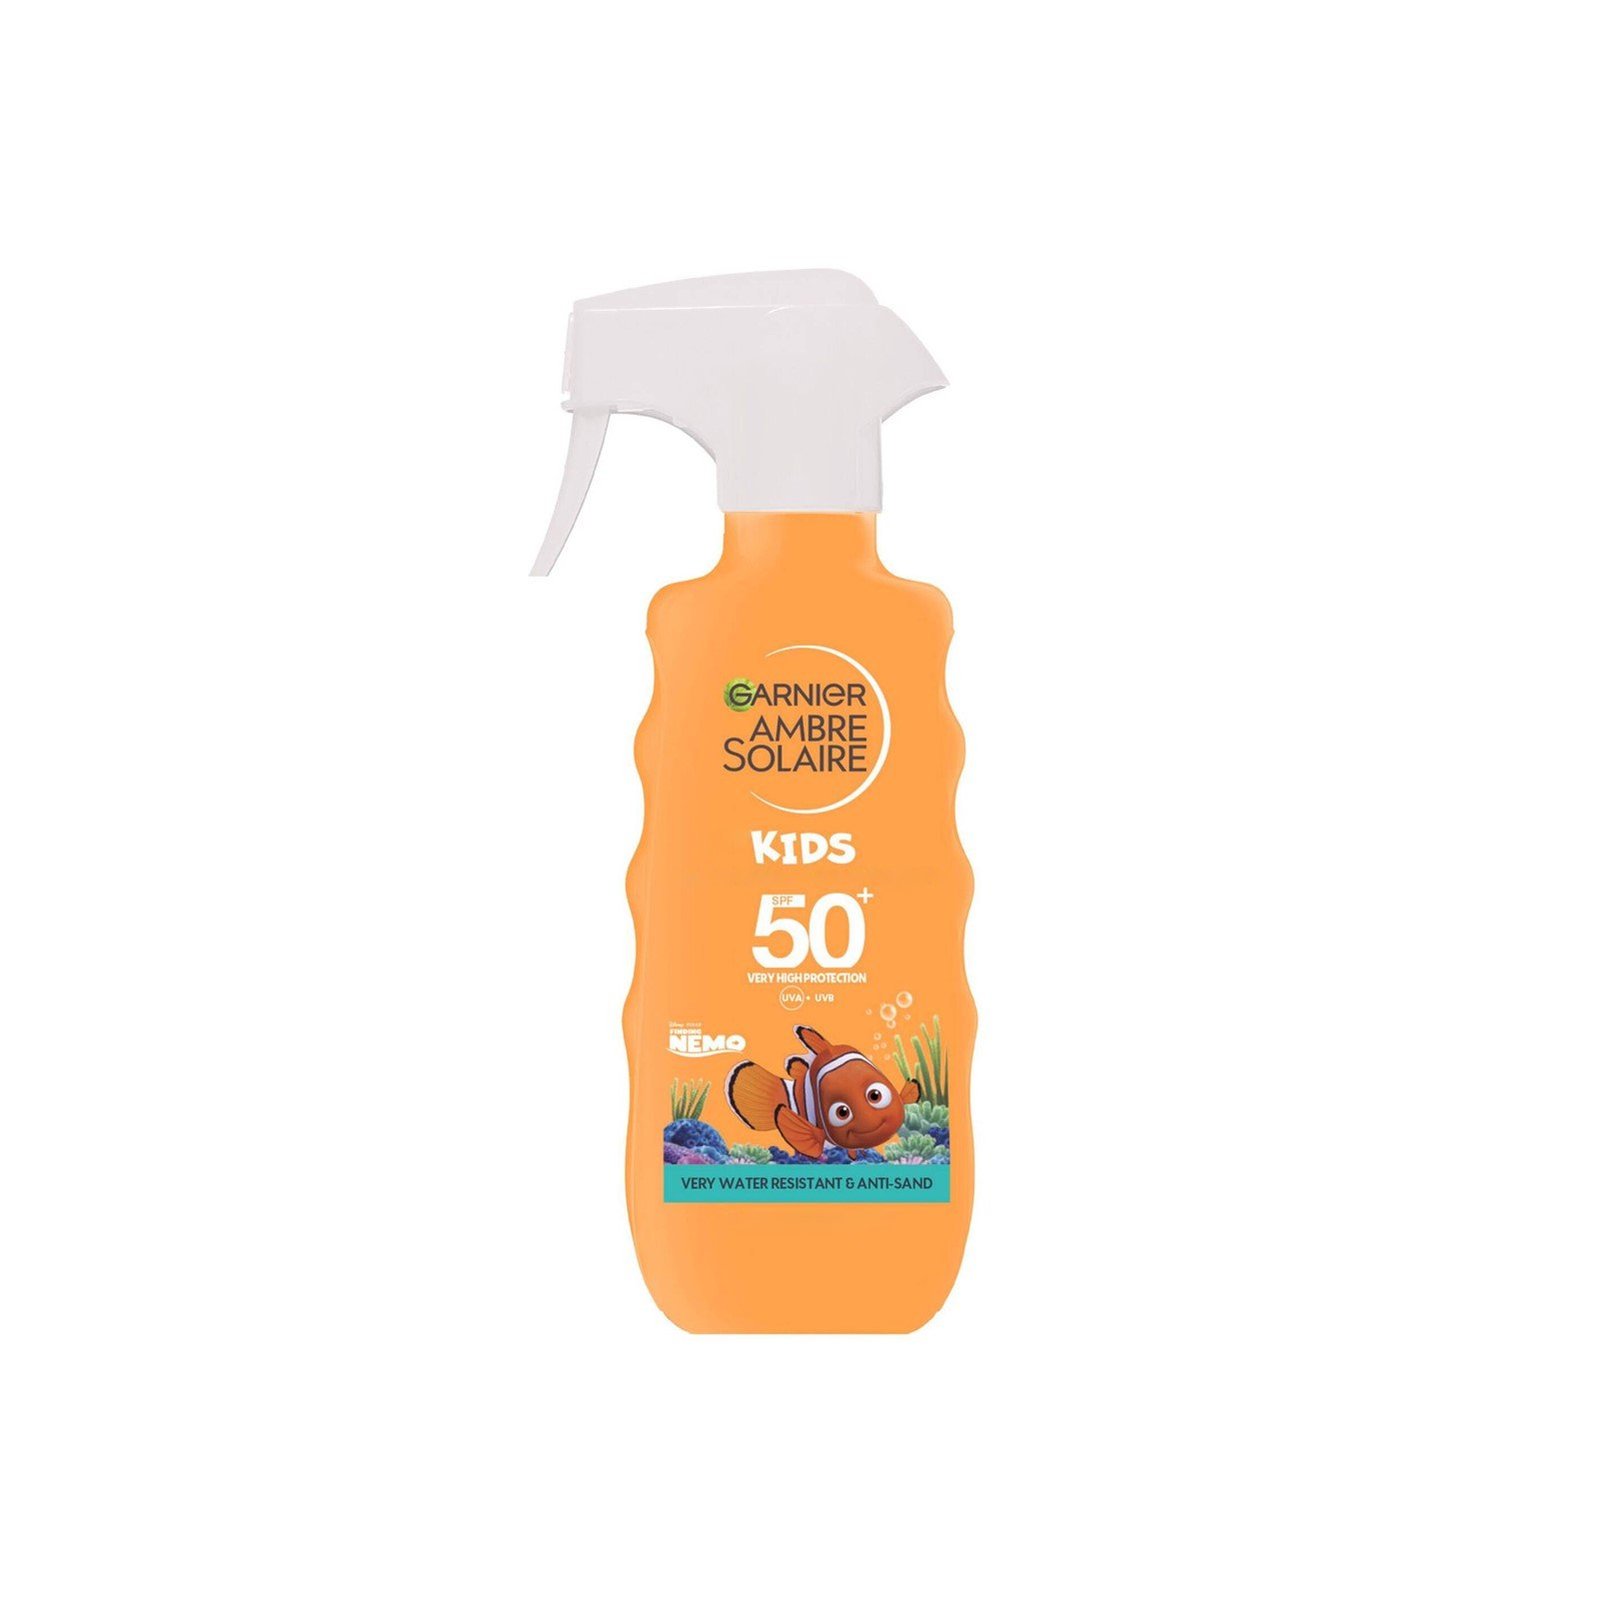 Garnier Ambre Solaire Kids Sun Protection Spray Nemo SPF50+ 270ml (9.1 fl oz)